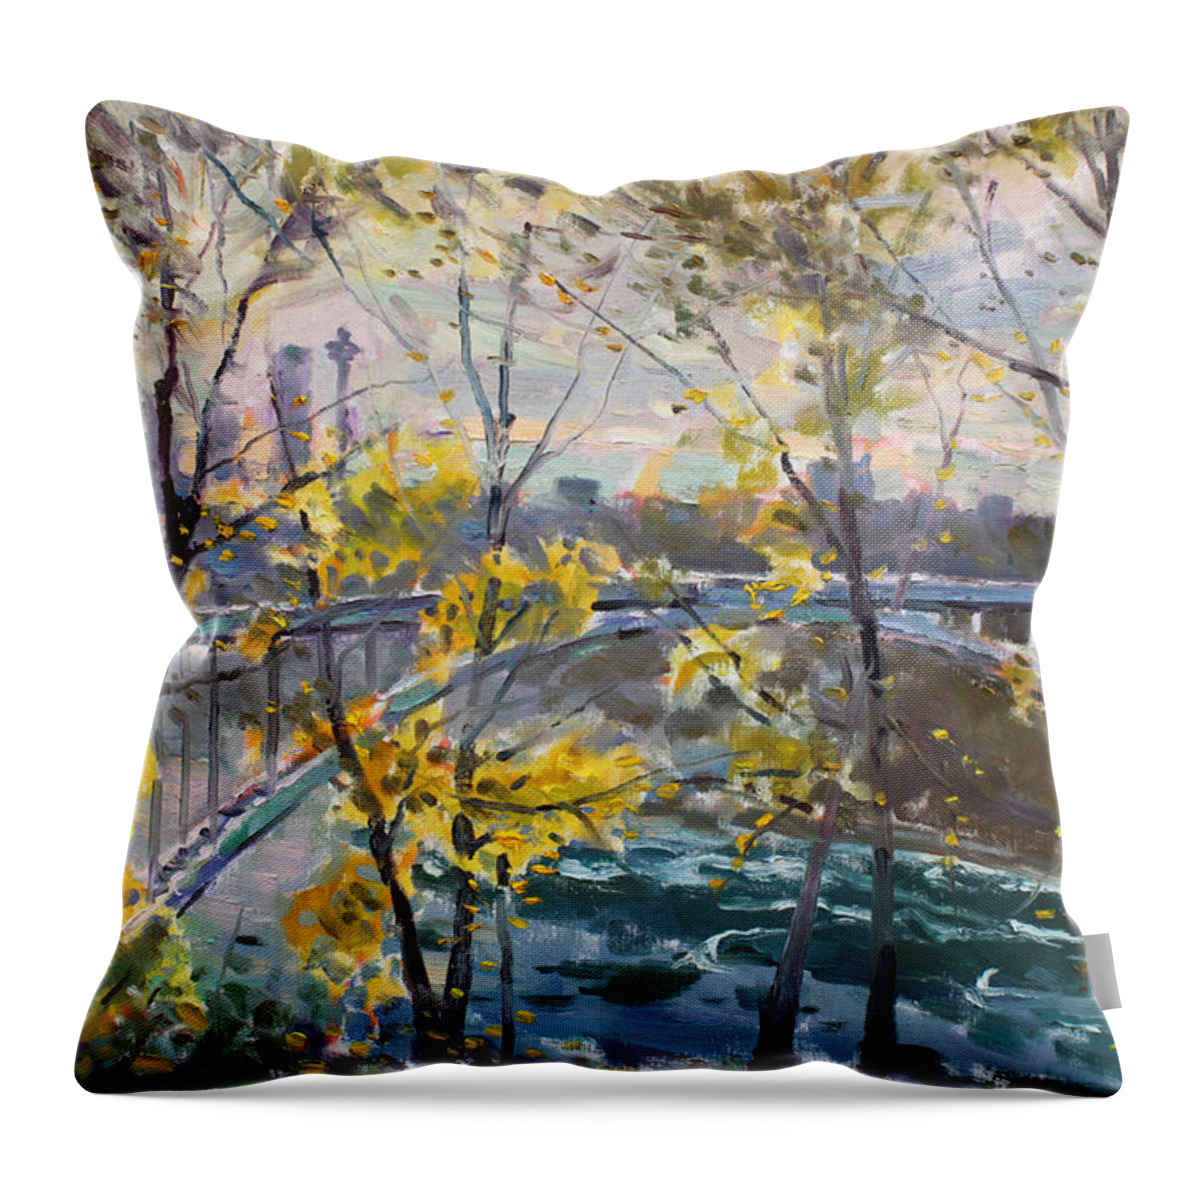 Rainbow Bridge Throw Pillow featuring the painting Rainbow Bridge by Ylli Haruni